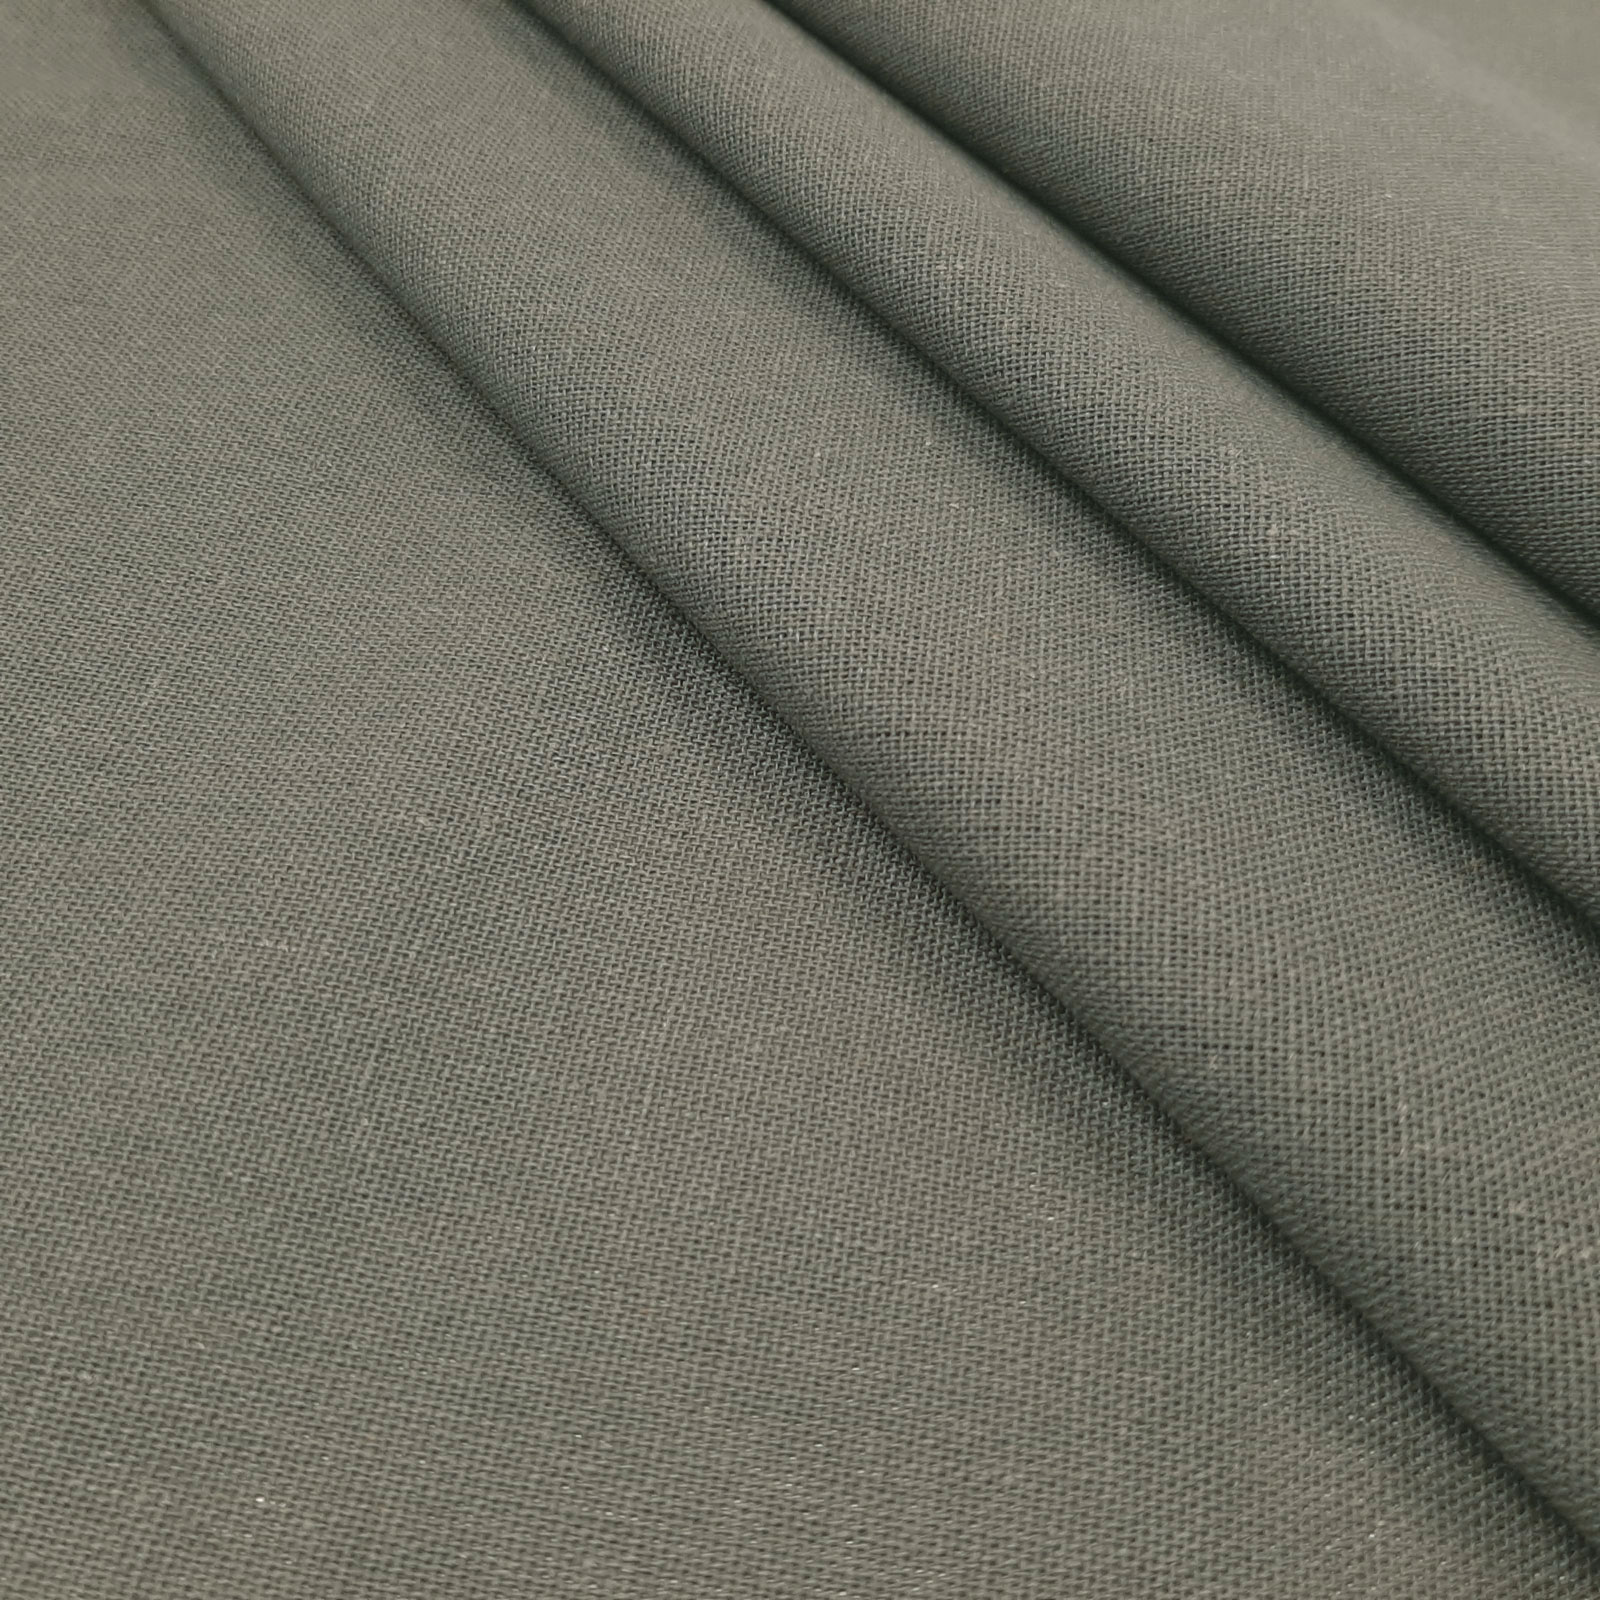 Bella - natural linen cotton fabric - Dark Grey